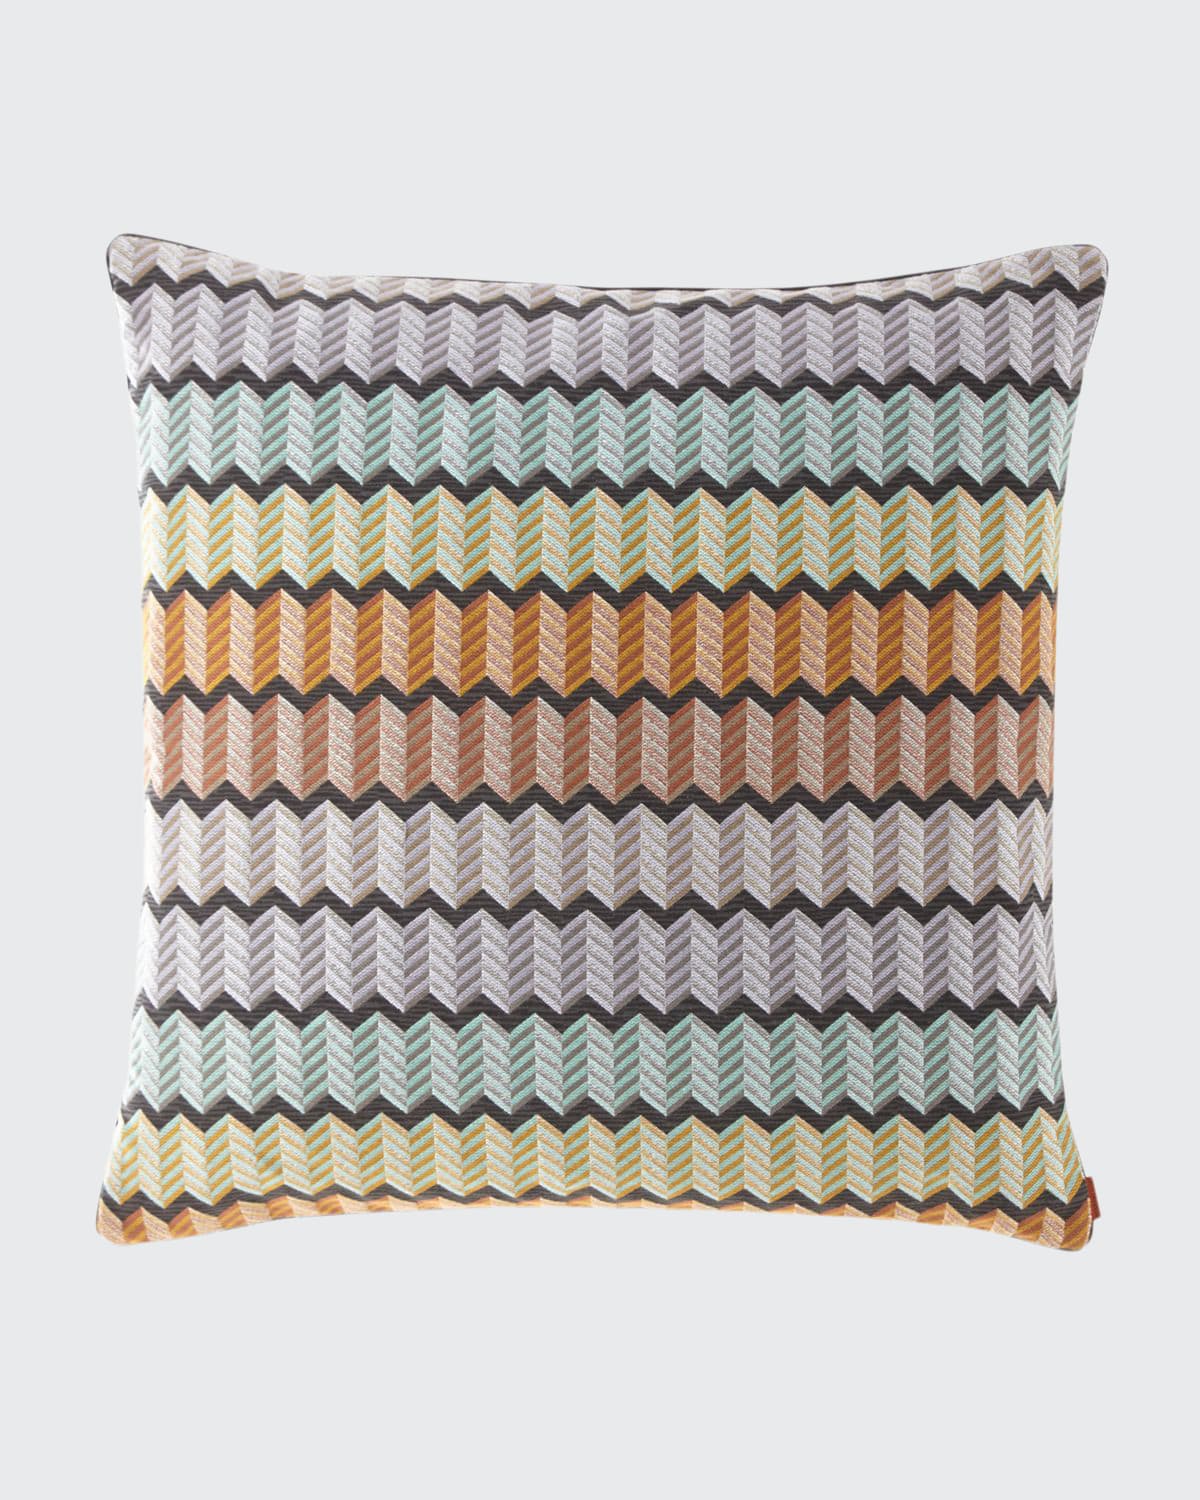 Missoni Waterford Pillow, 24"sq. In Multi Pattern